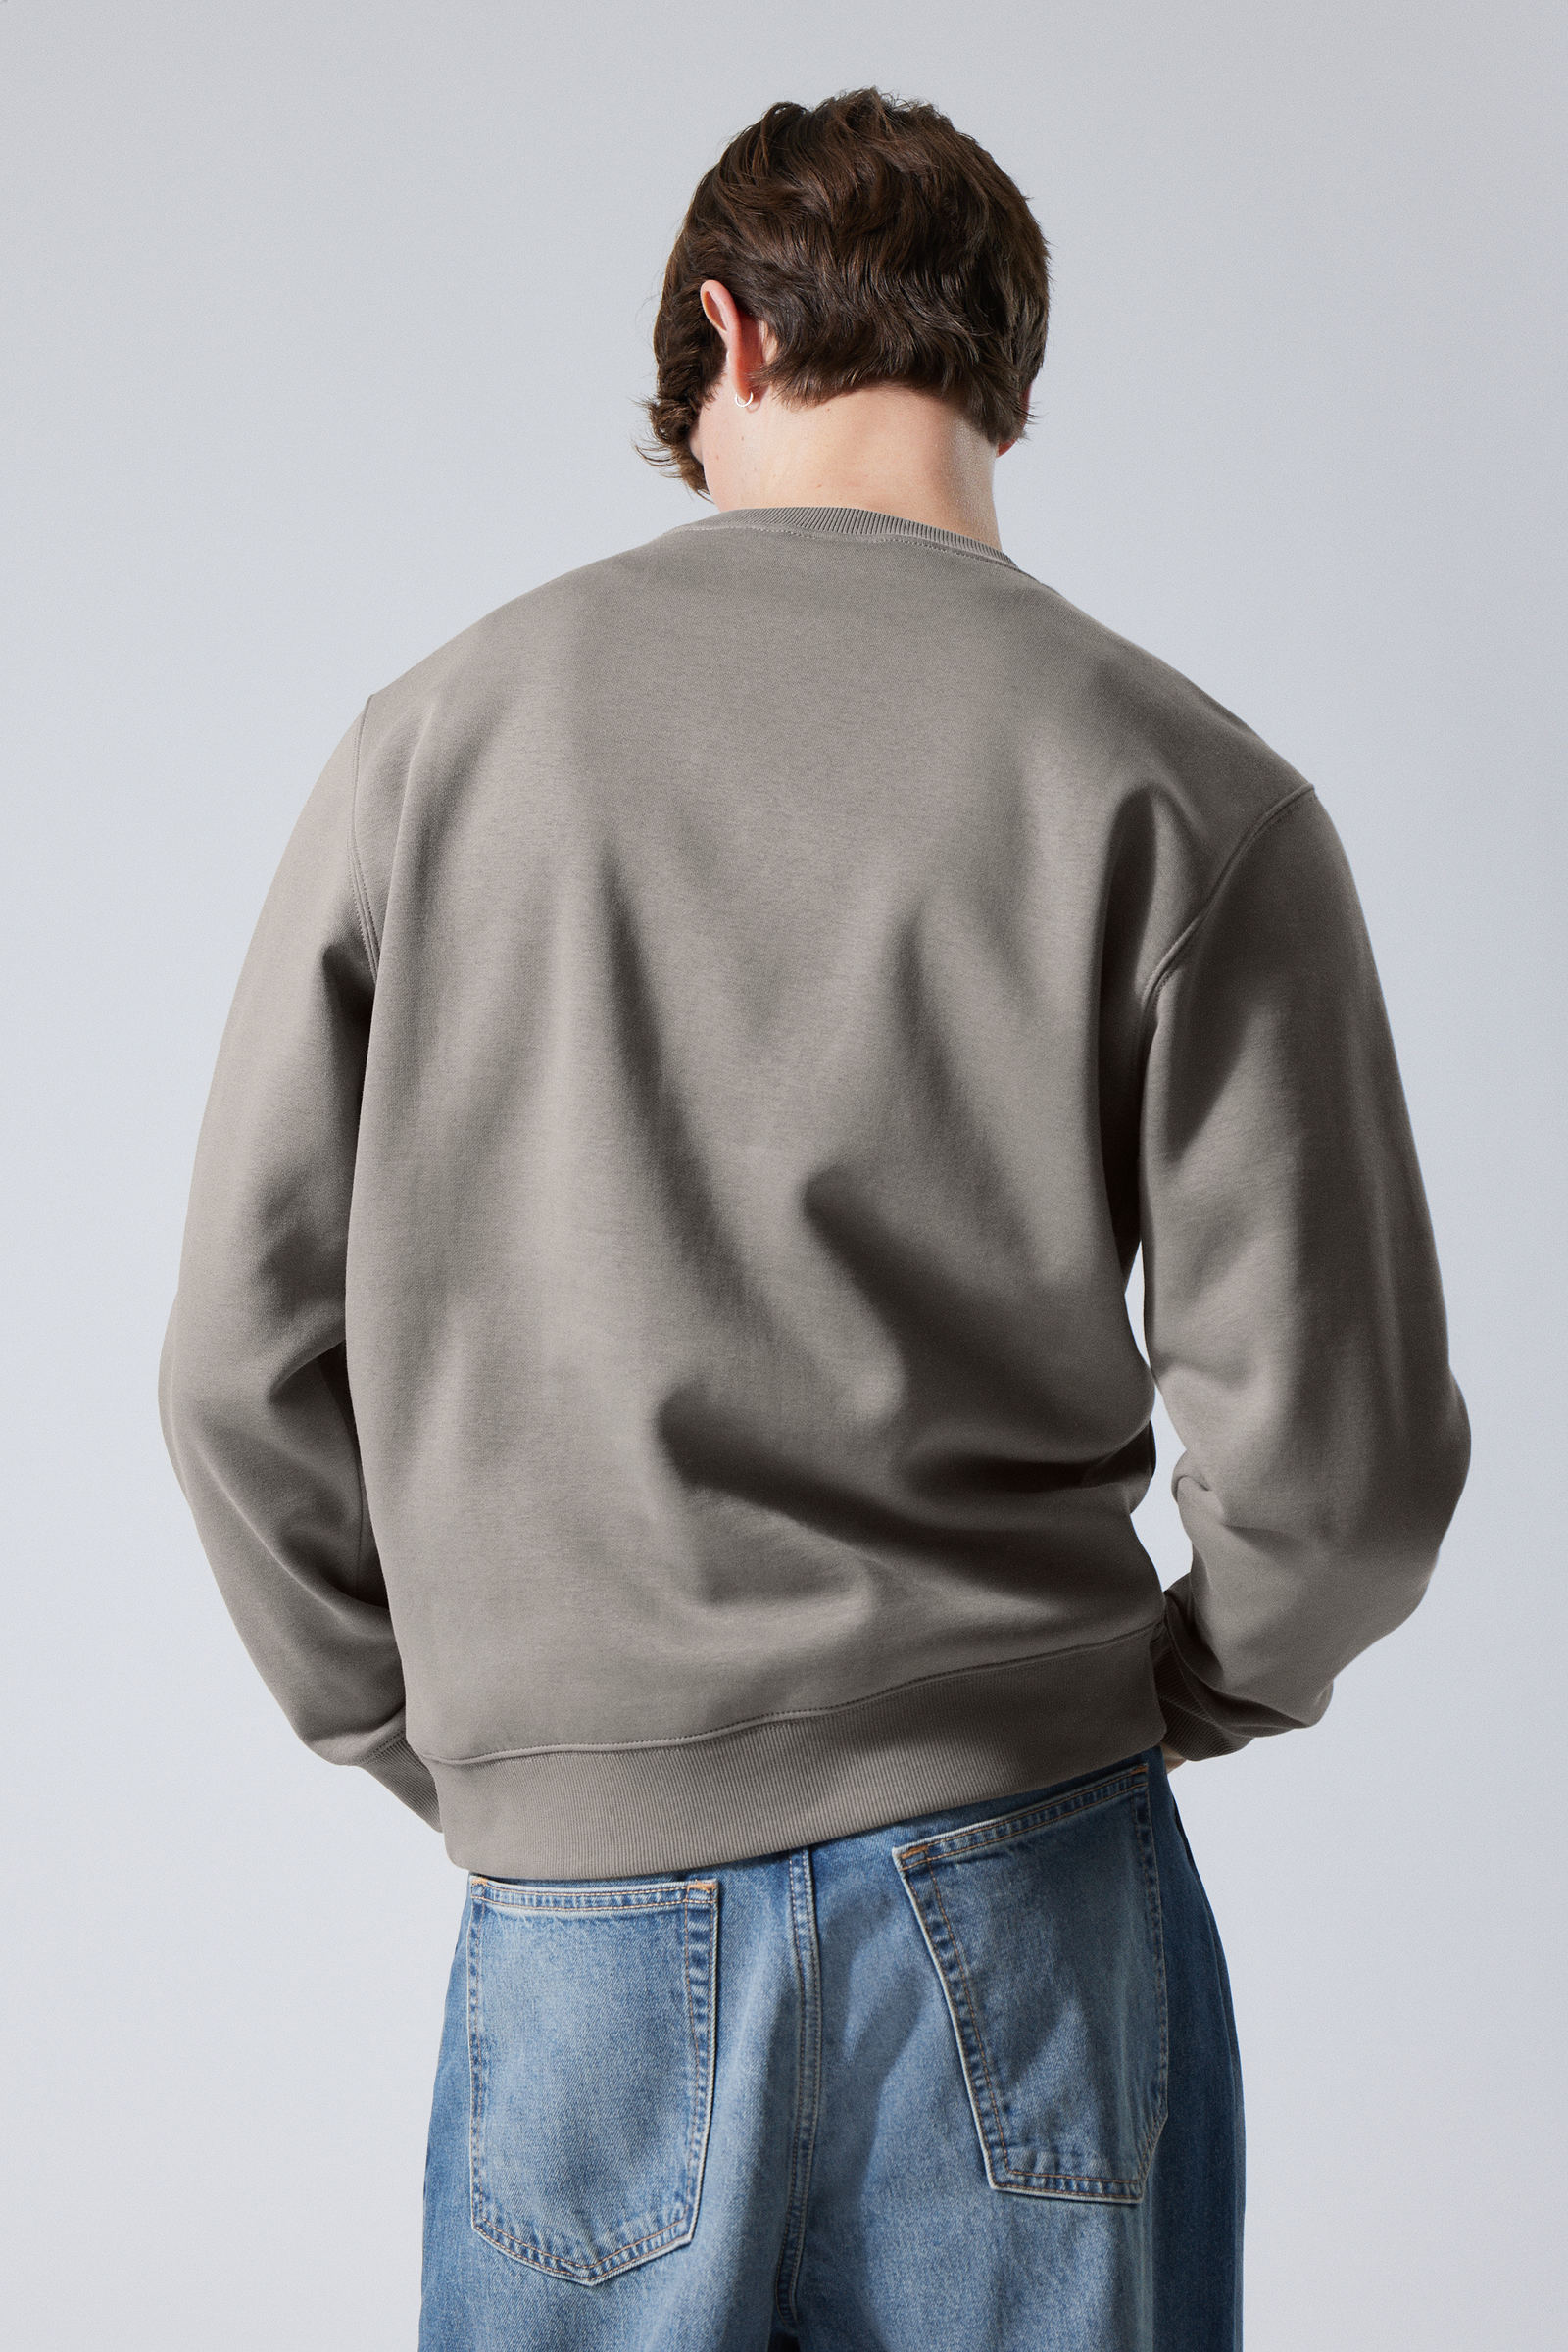 #787675 - Standard Midweight Sweatshirt - 2